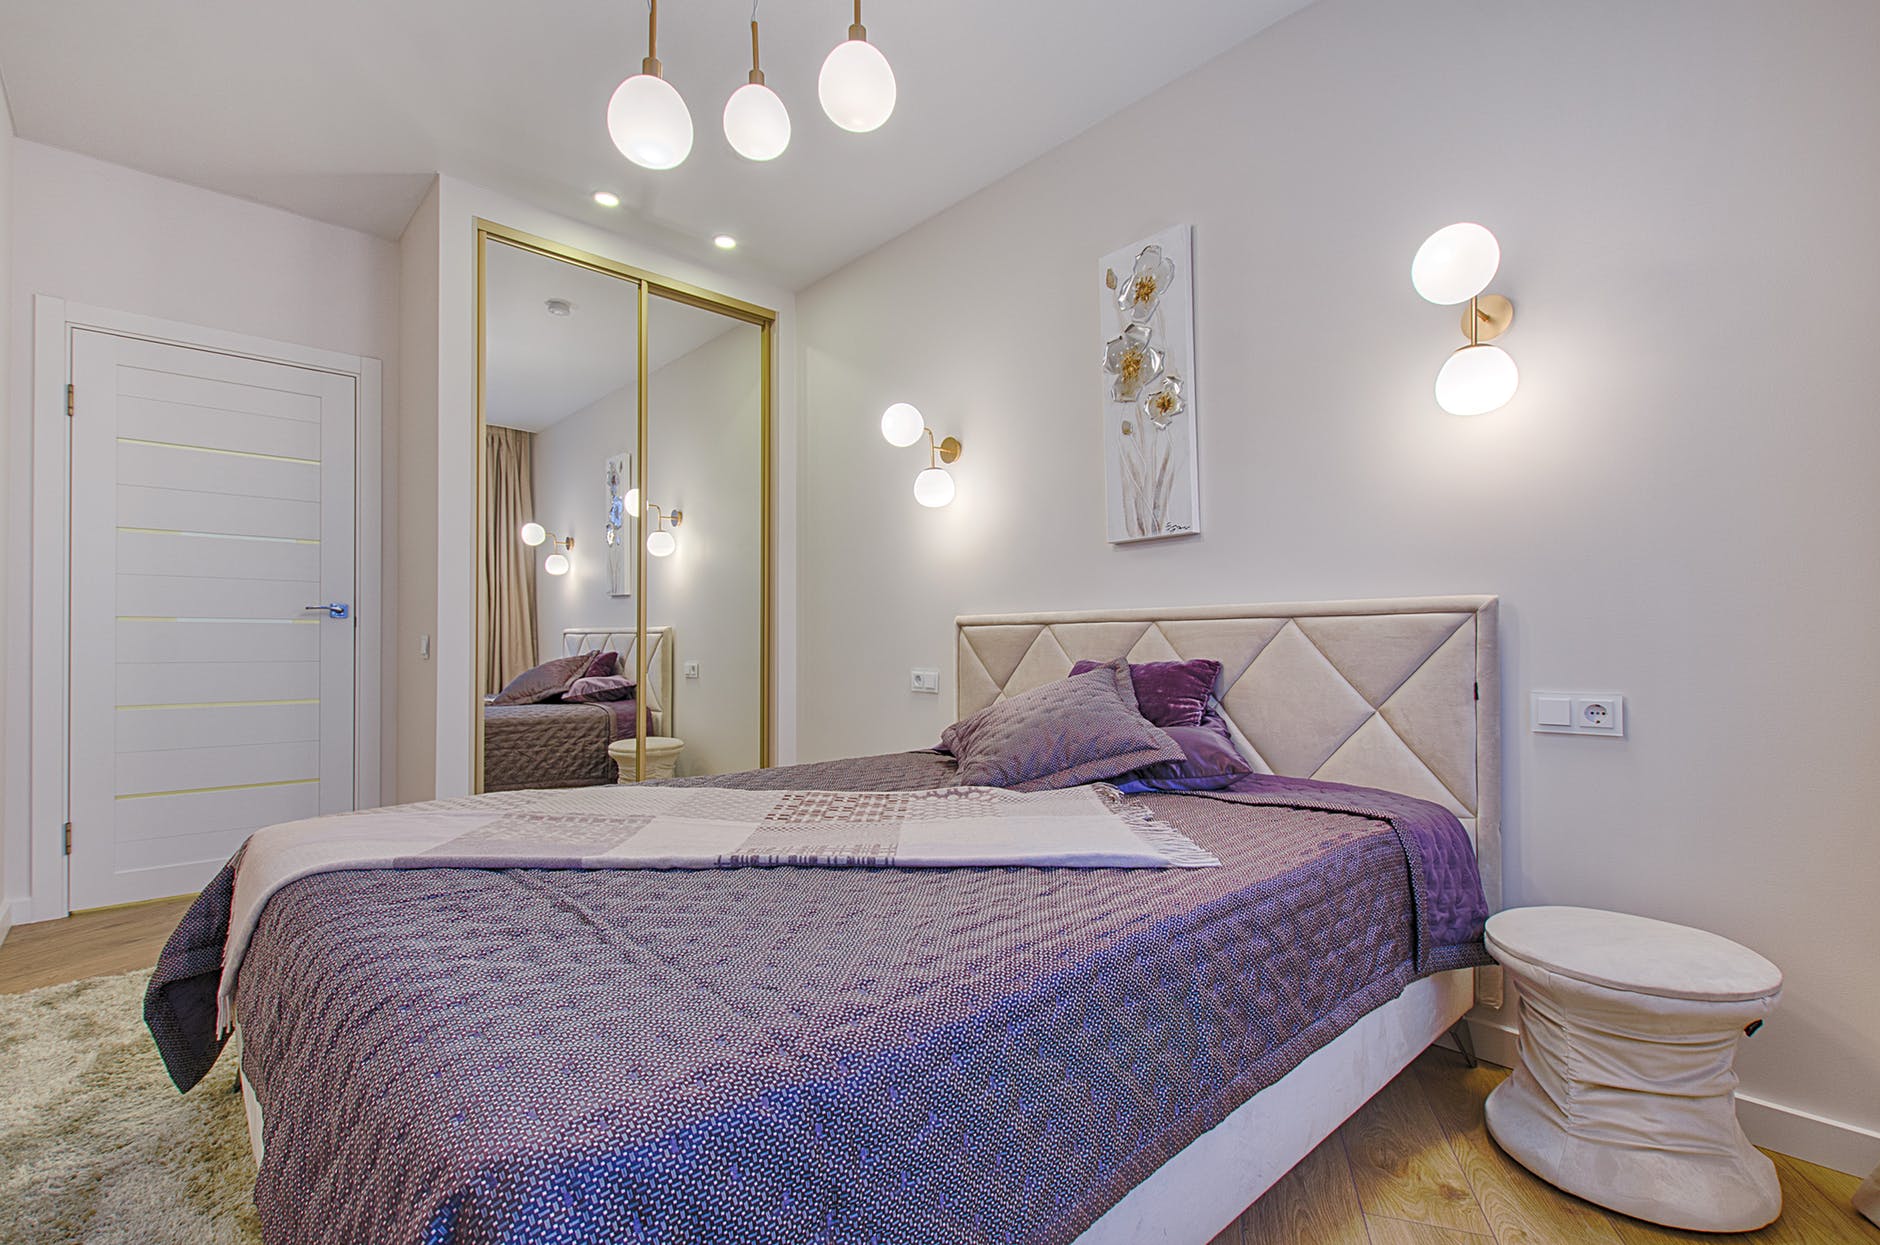 hotel and bedroom lighting 